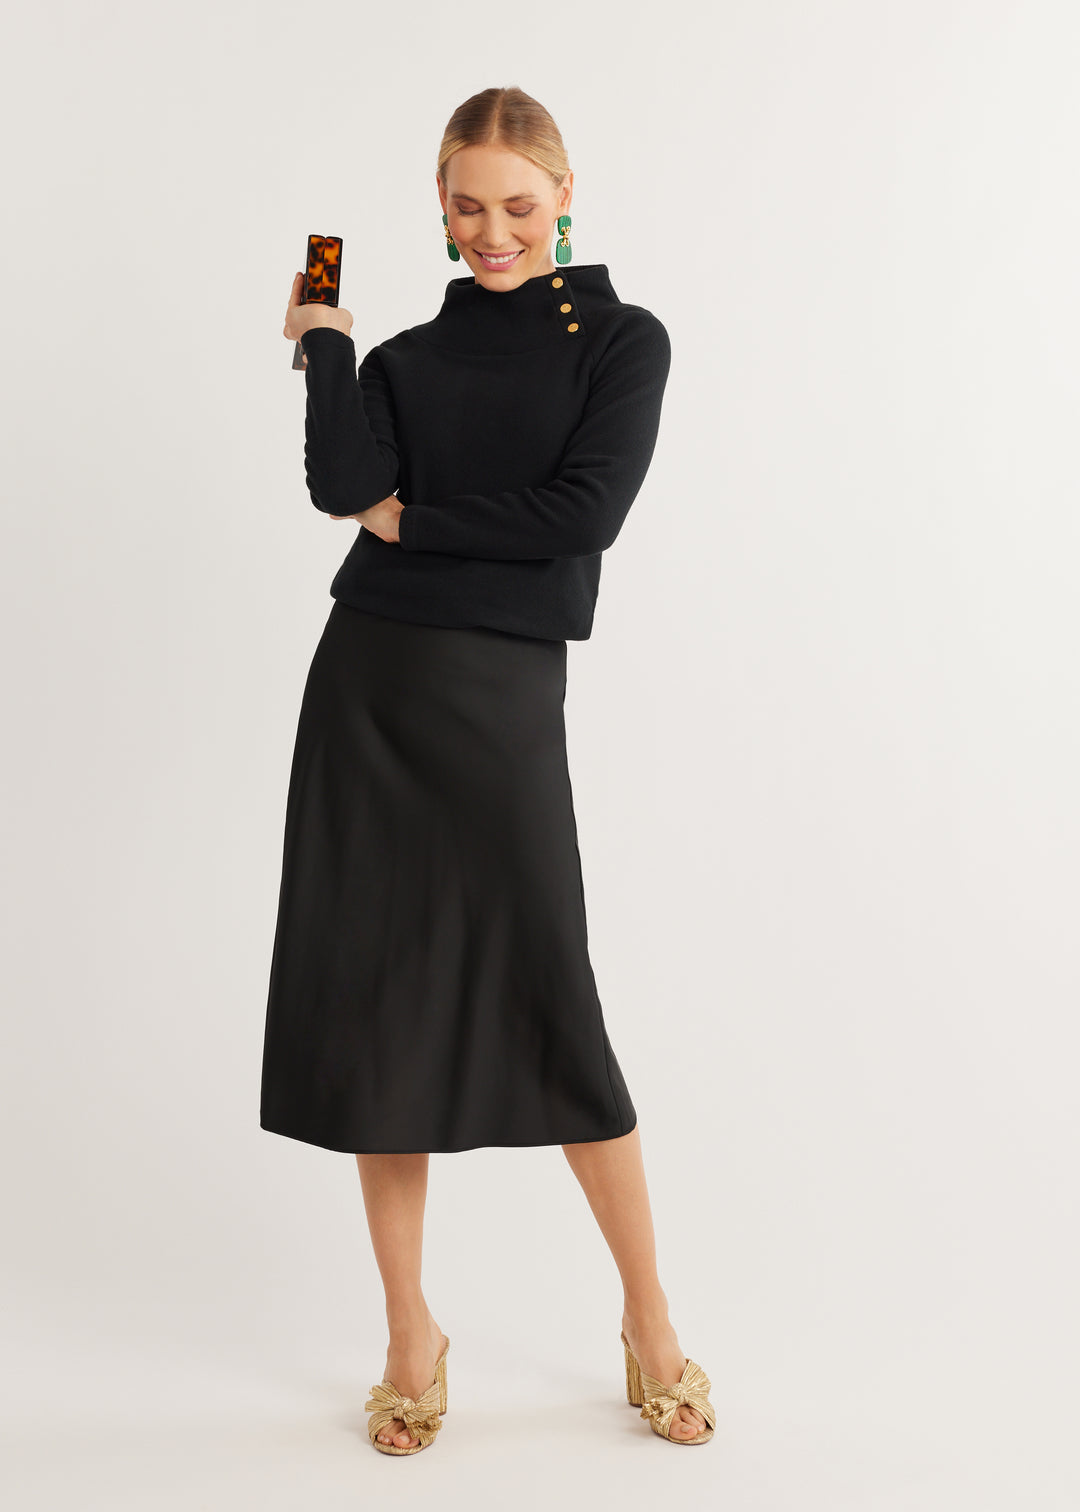 Marielle Mock Neck in Vello Fleece (Black)